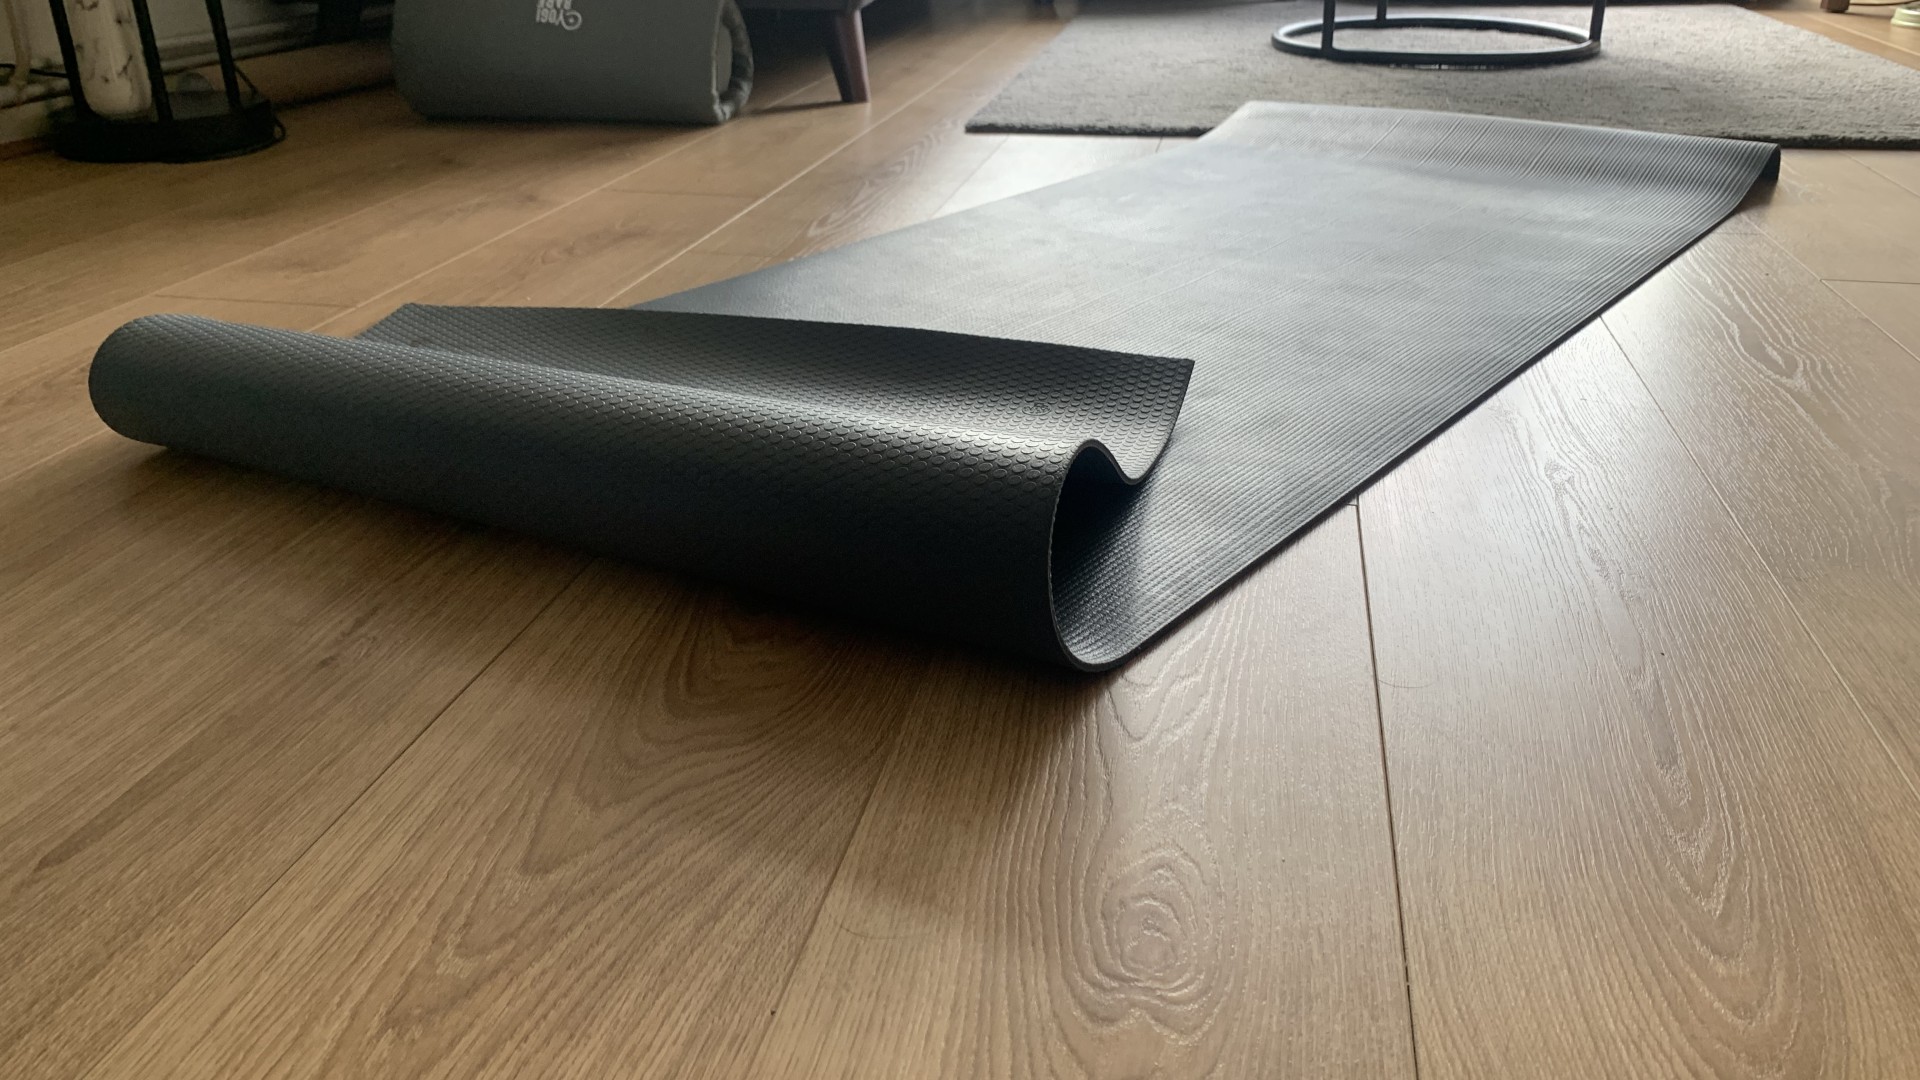 Best yoga mats: Image of the Manduka PROlite yoga mat folded over at the corner